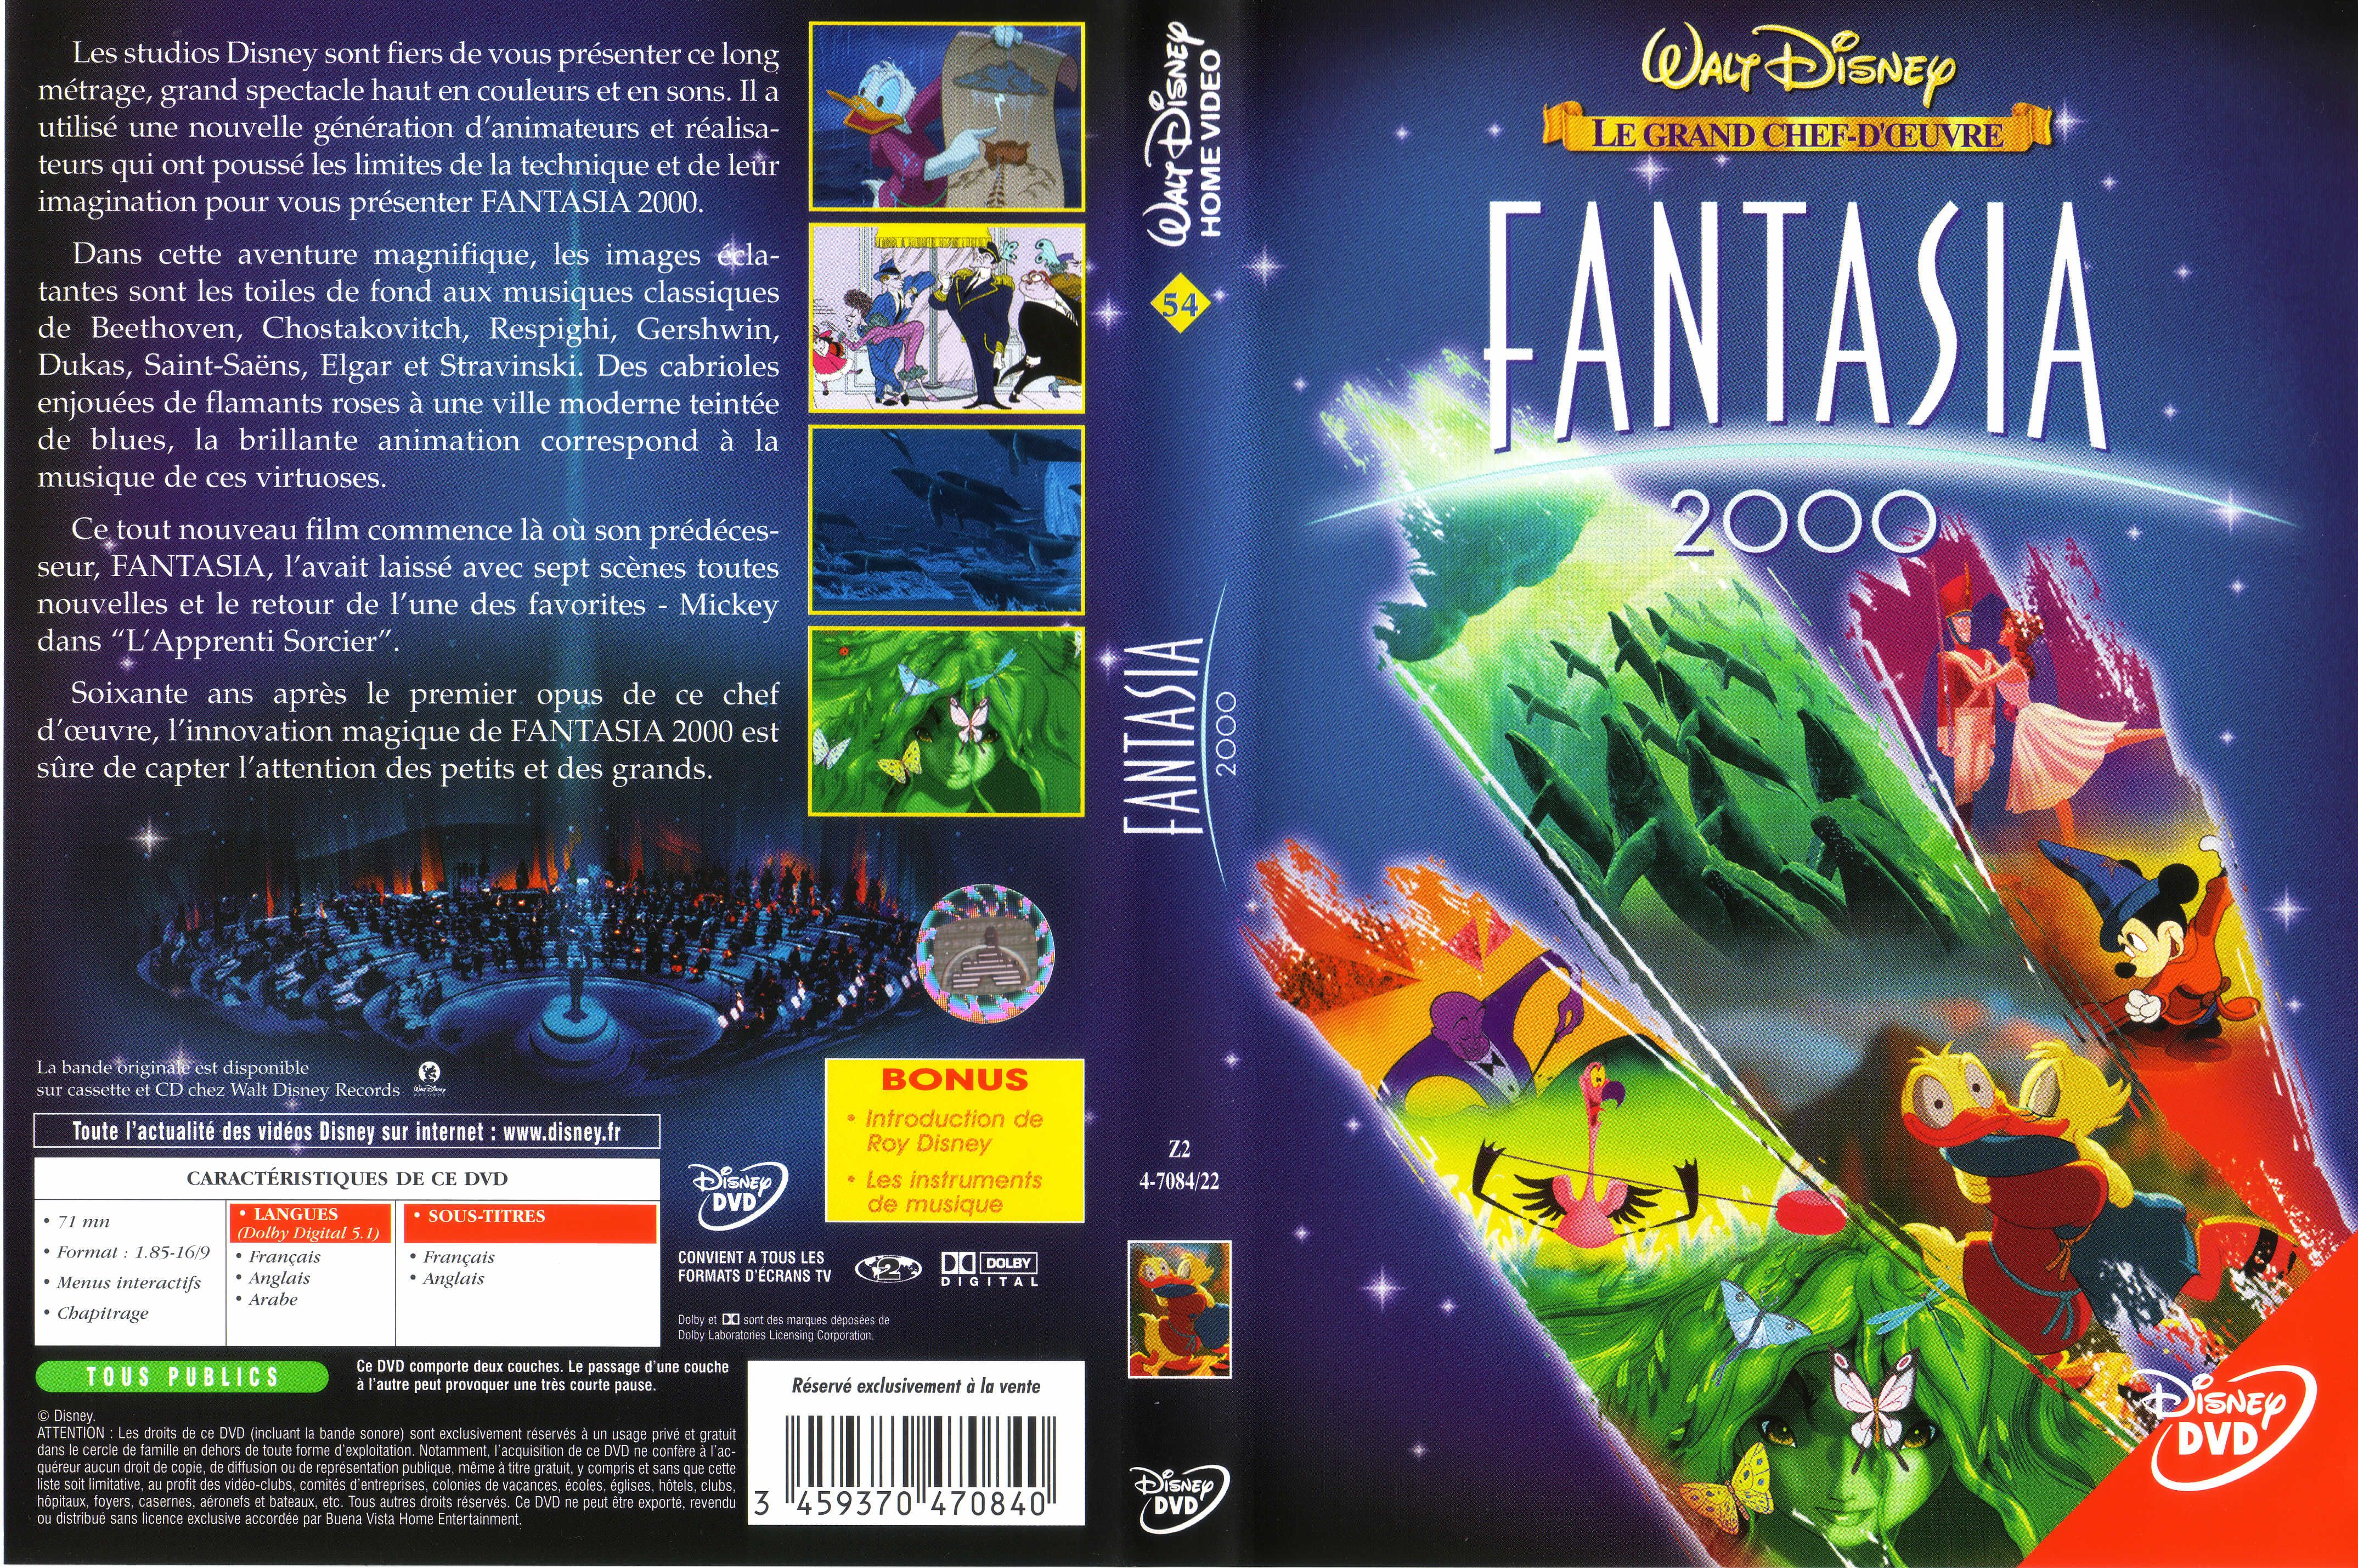 Jaquette DVD Fantasia 2000